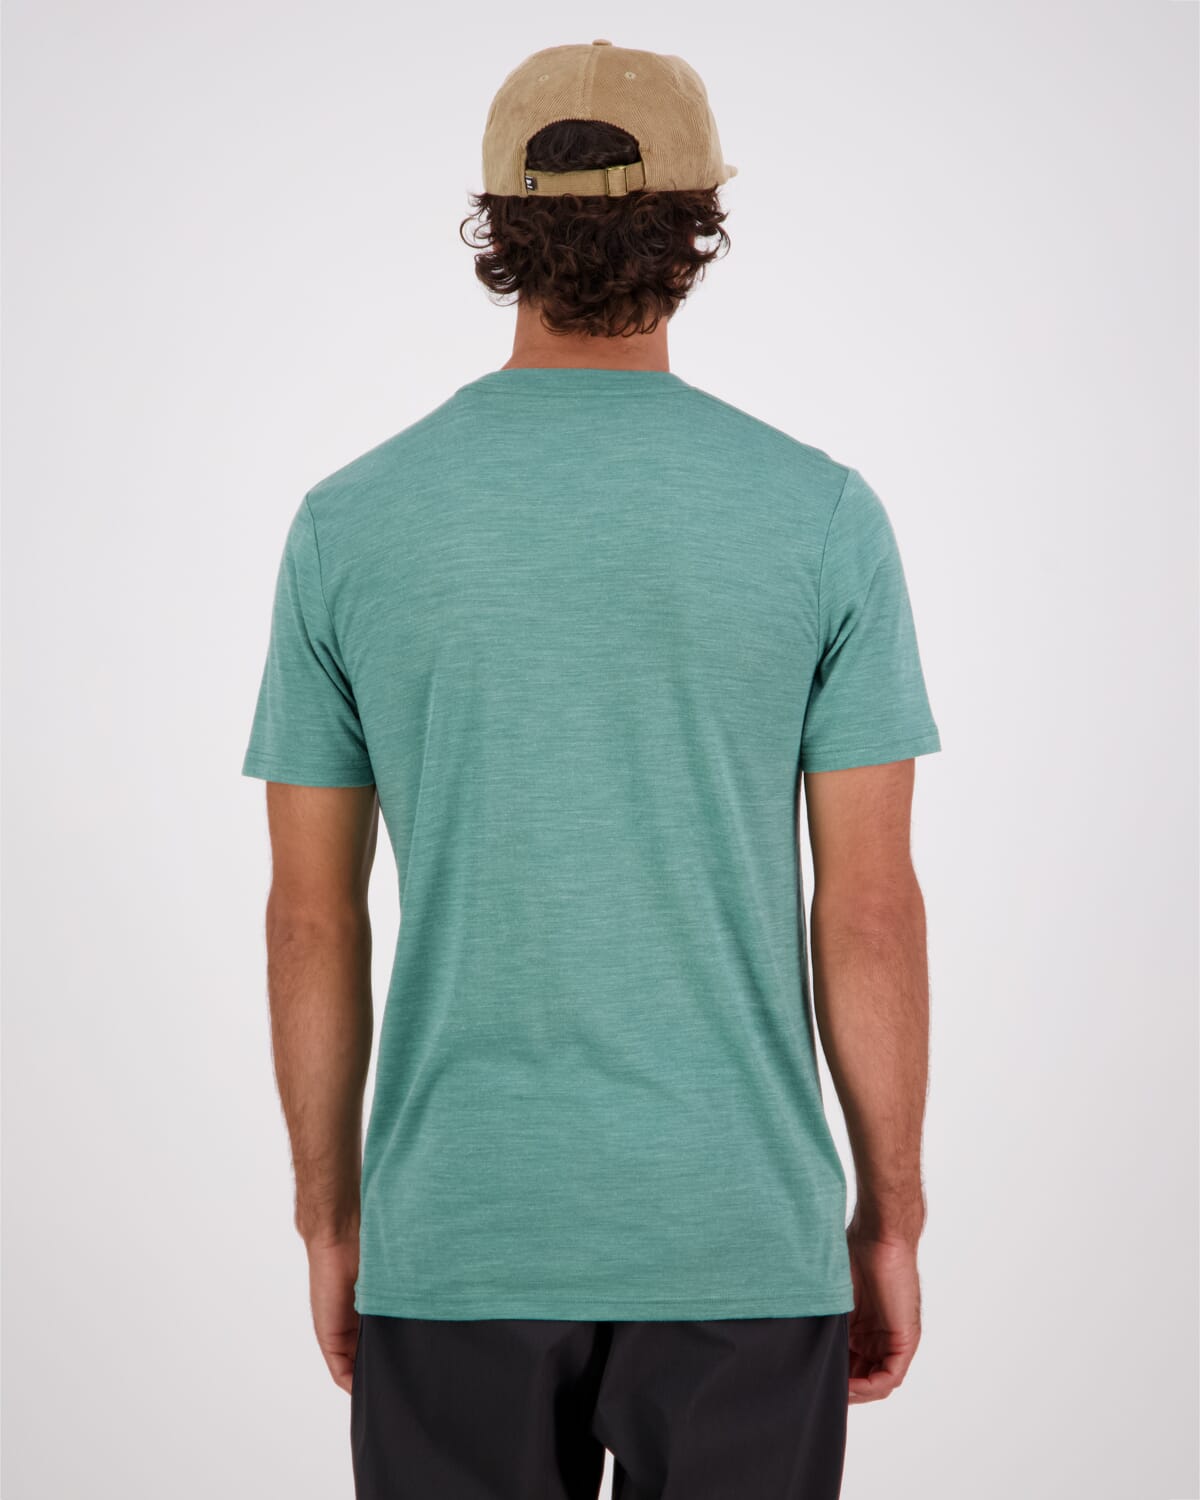 Zephyr Merino Cool T-Shirt - Smokey Green